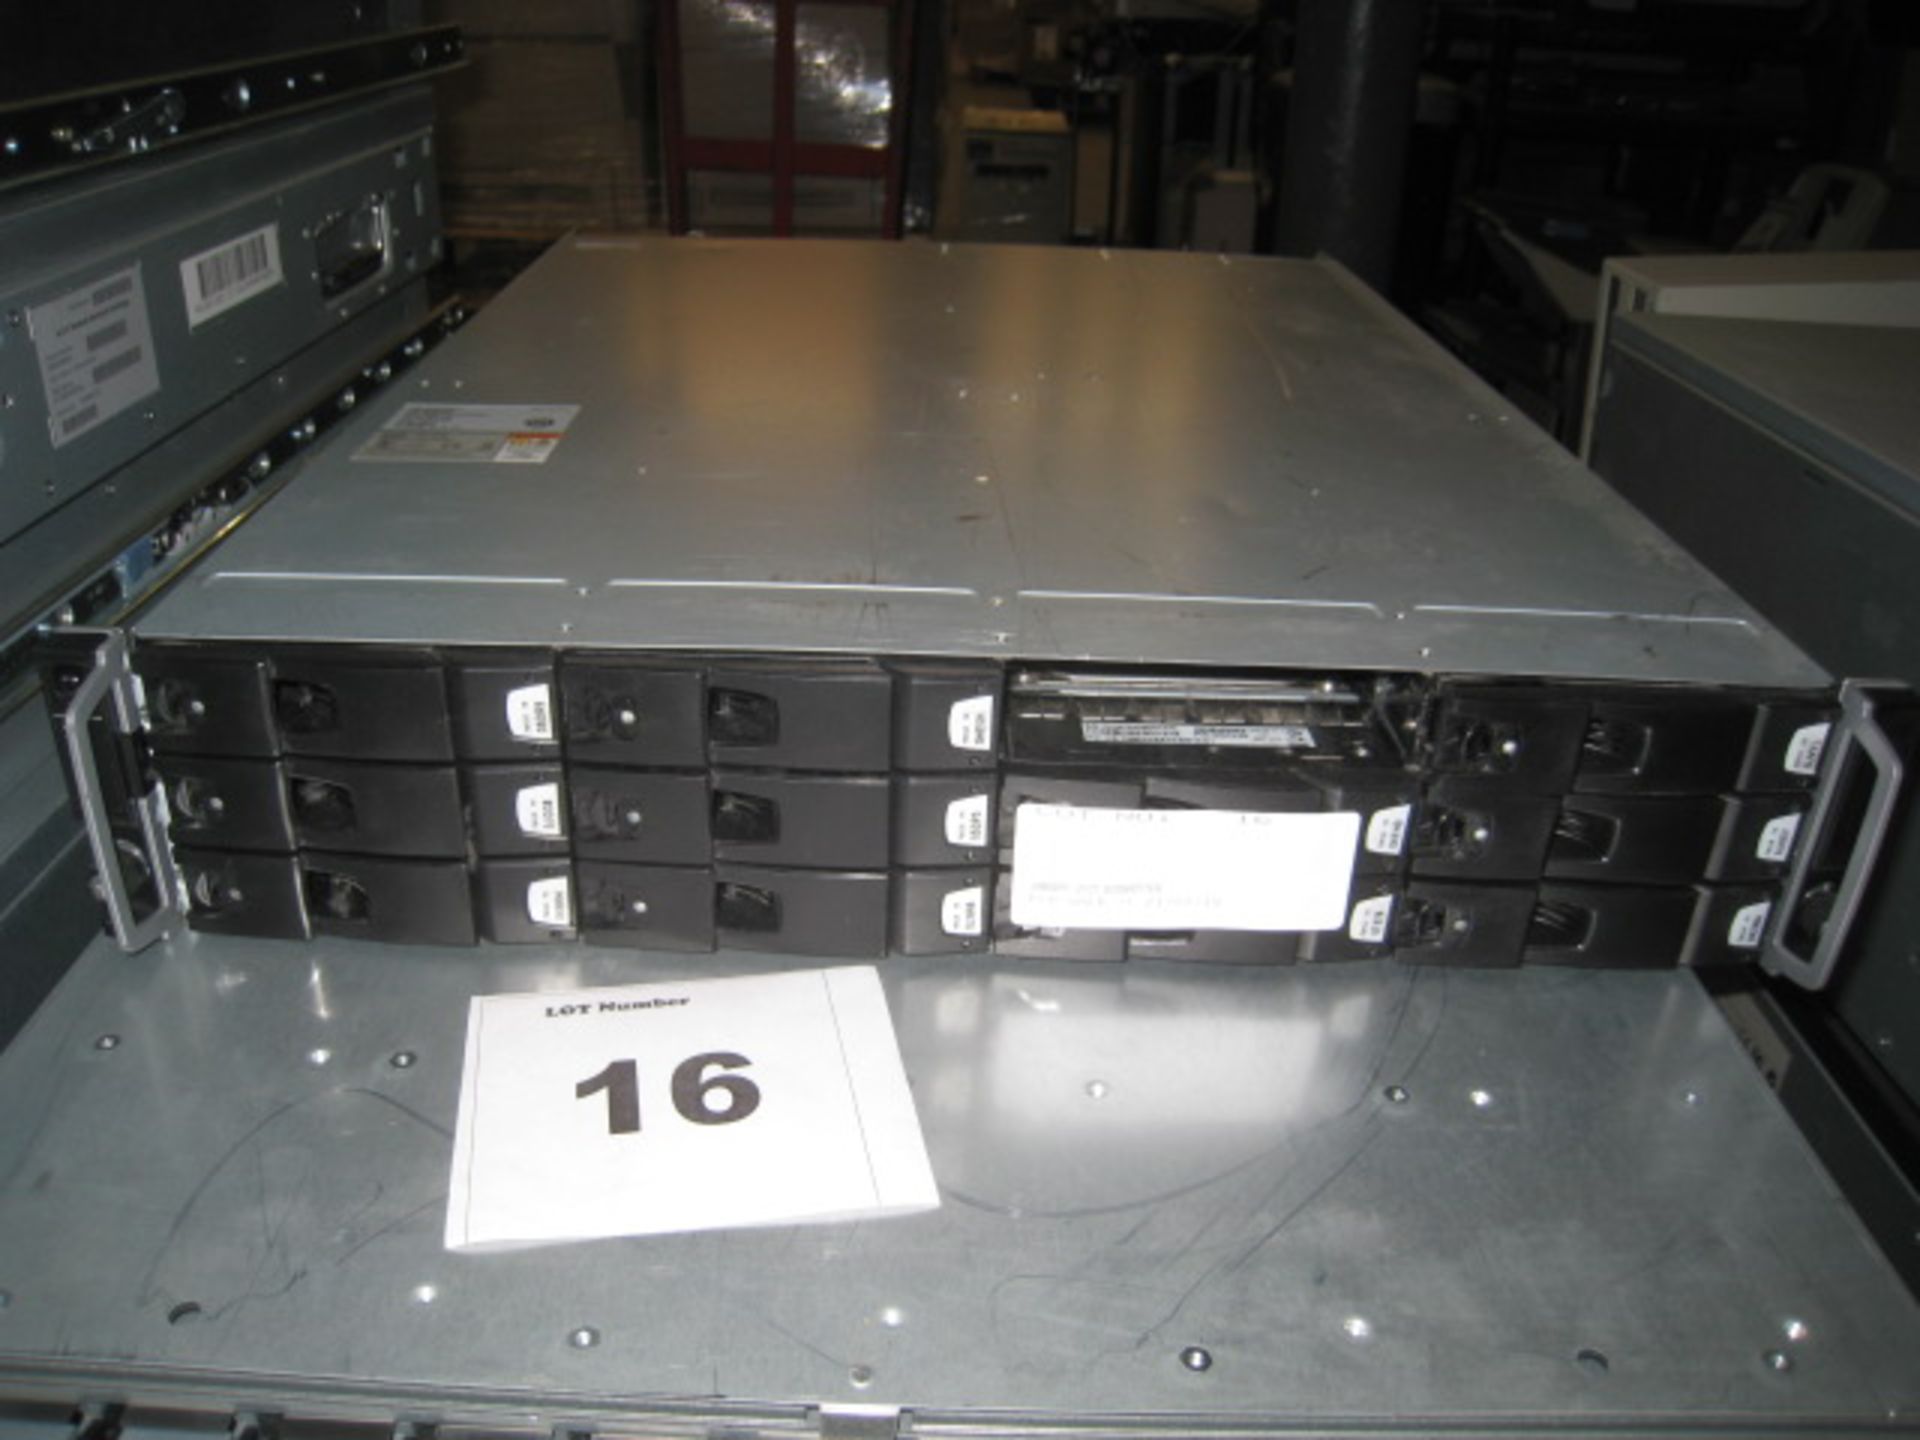 Xyratex RS-1220-X - SATA Raid Storage Array containing 10 x 750Gb SATA HDD's ( Capable of holding 12